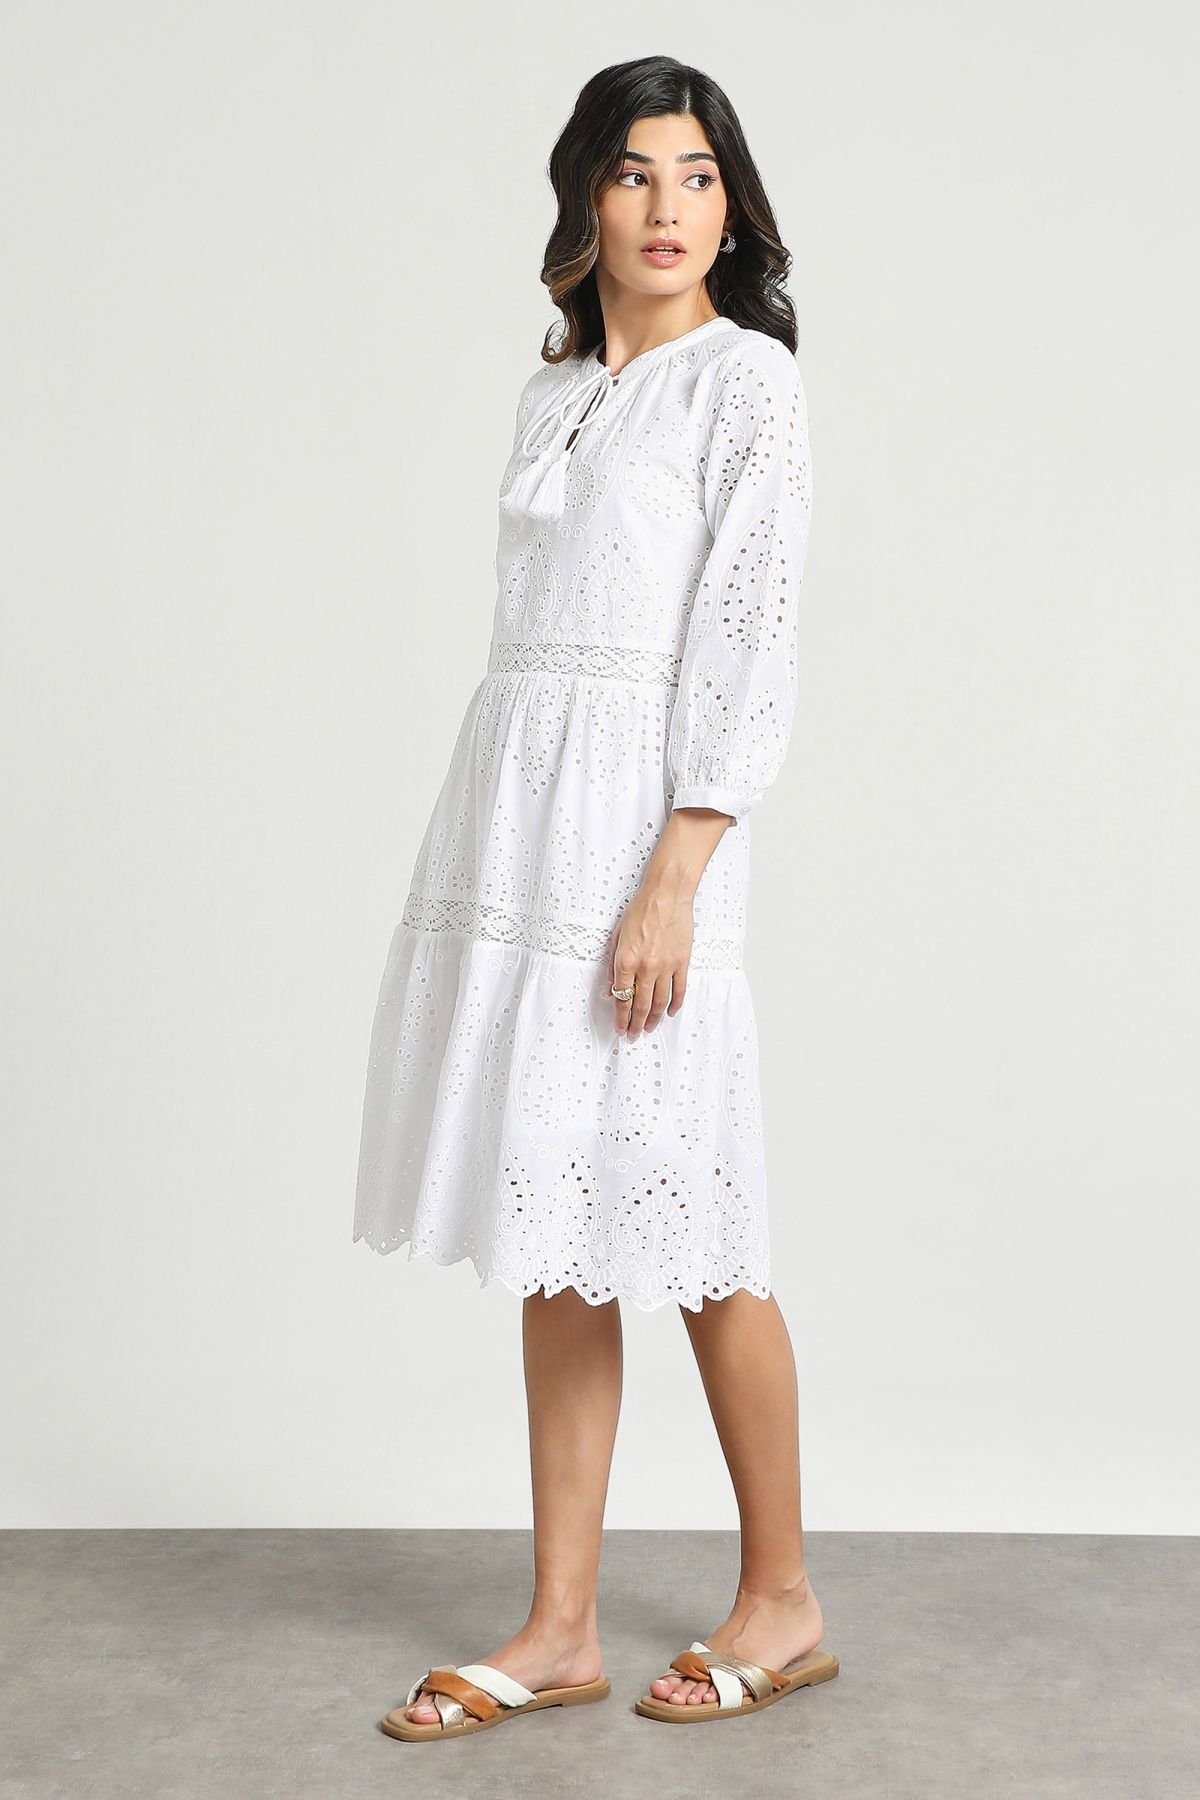 Buy Celeste Chiffoli Fabric White Dress | Couturelabs UAE